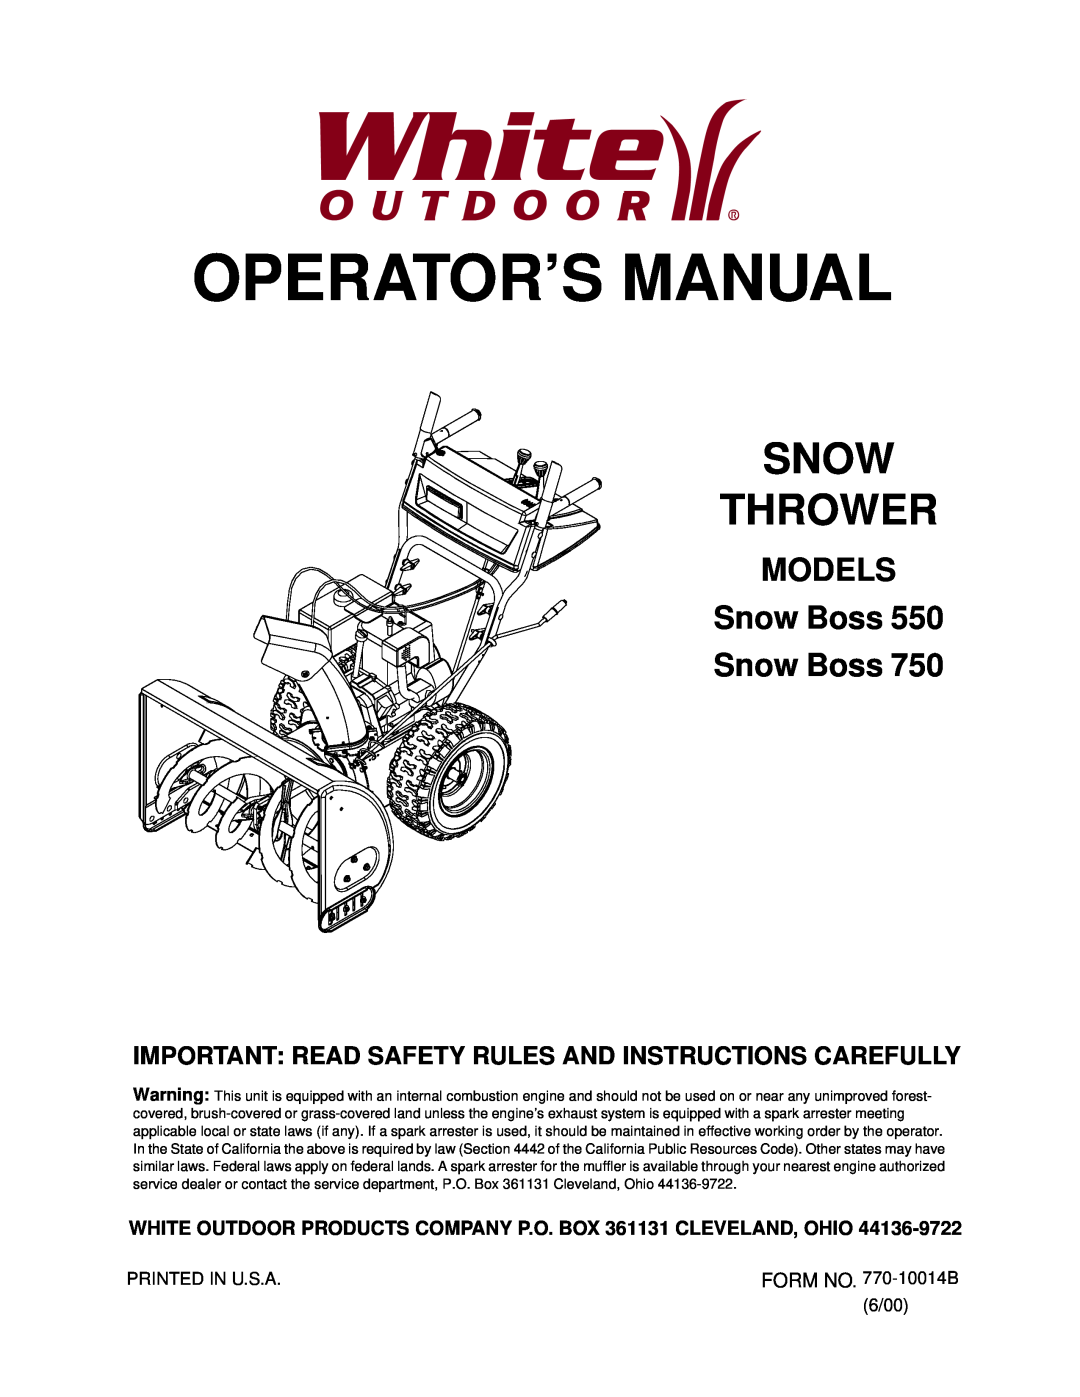 Bolens 750, 550 manual Operator’S Manual, Snow Thrower, MODELS Snow Boss Snow Boss 